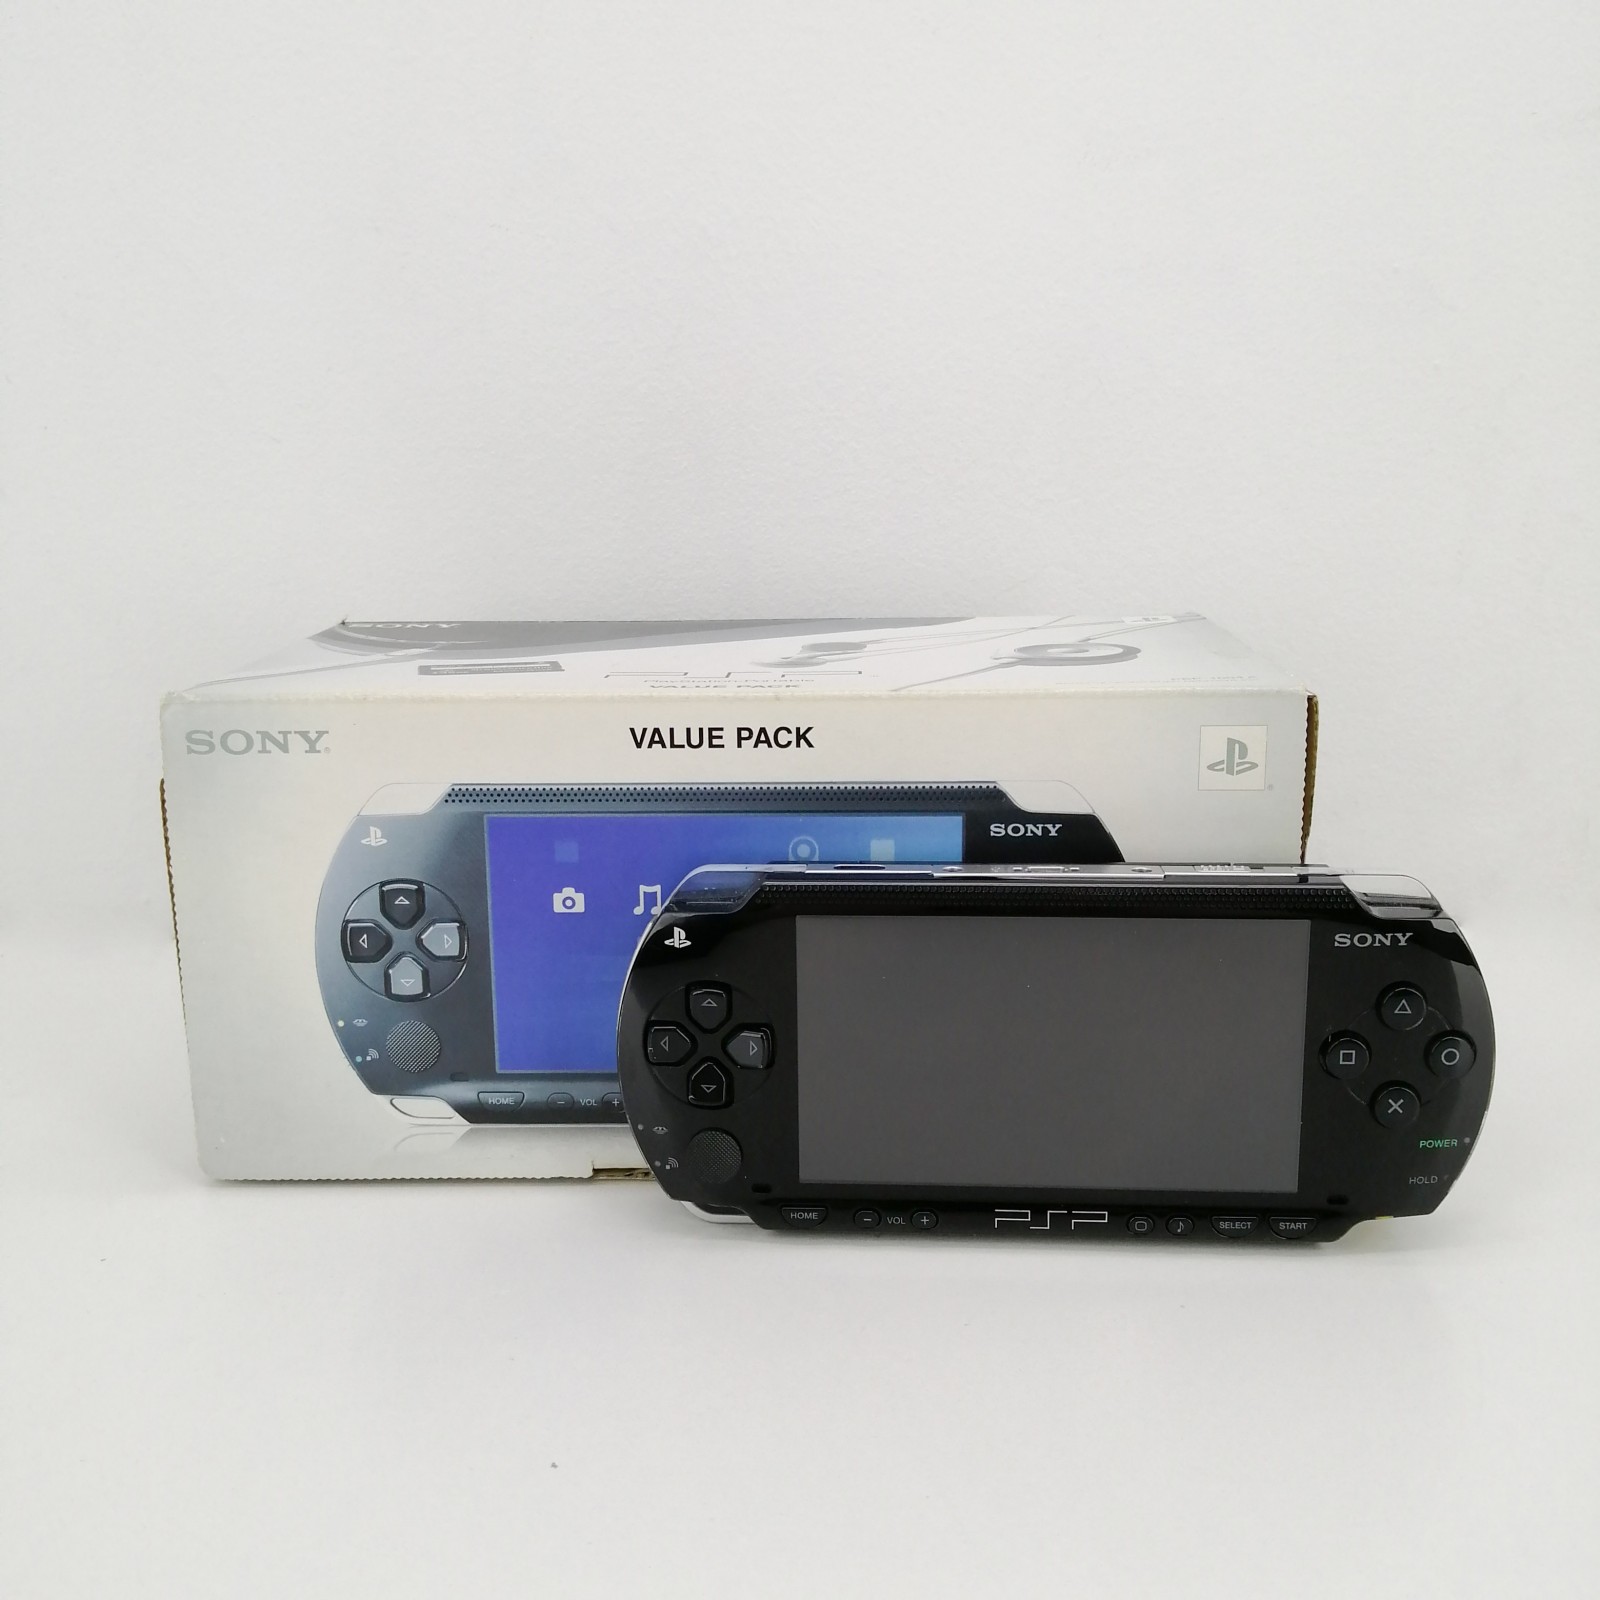 Consola Sony PSP Modelo 1004K Value Pack con caja original y papeles de